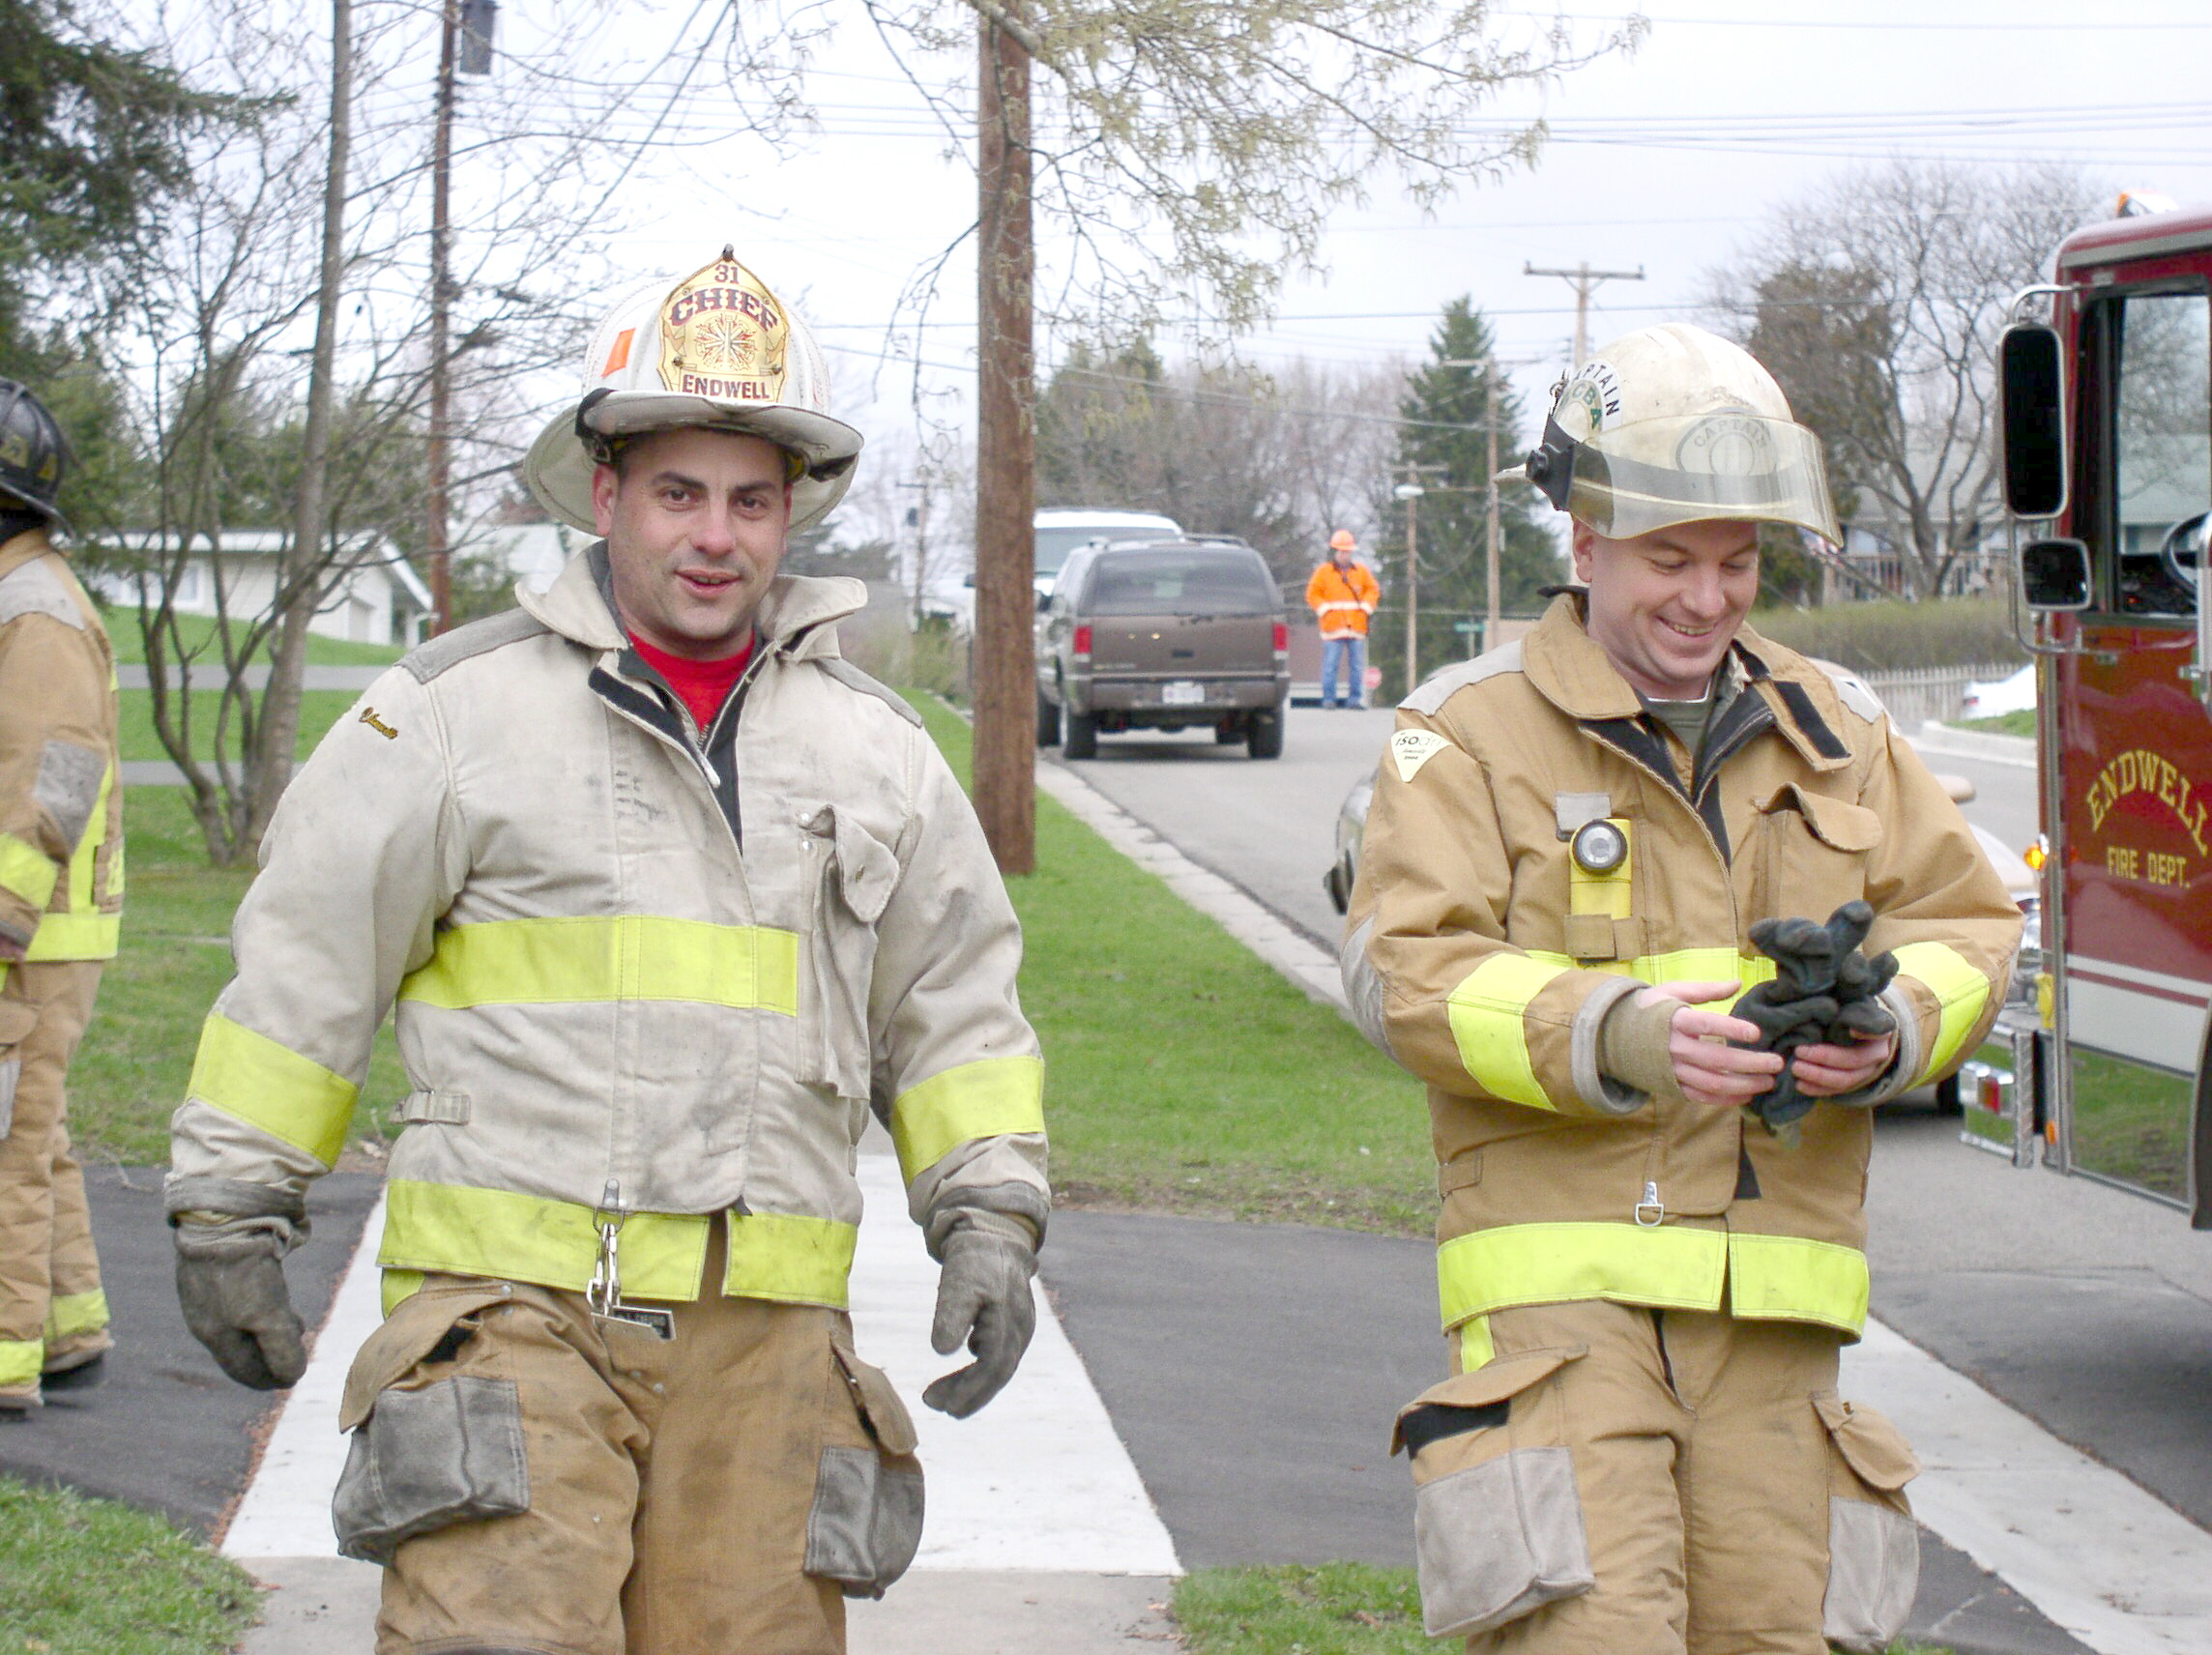 04-23-03  Response - Fire, Winston